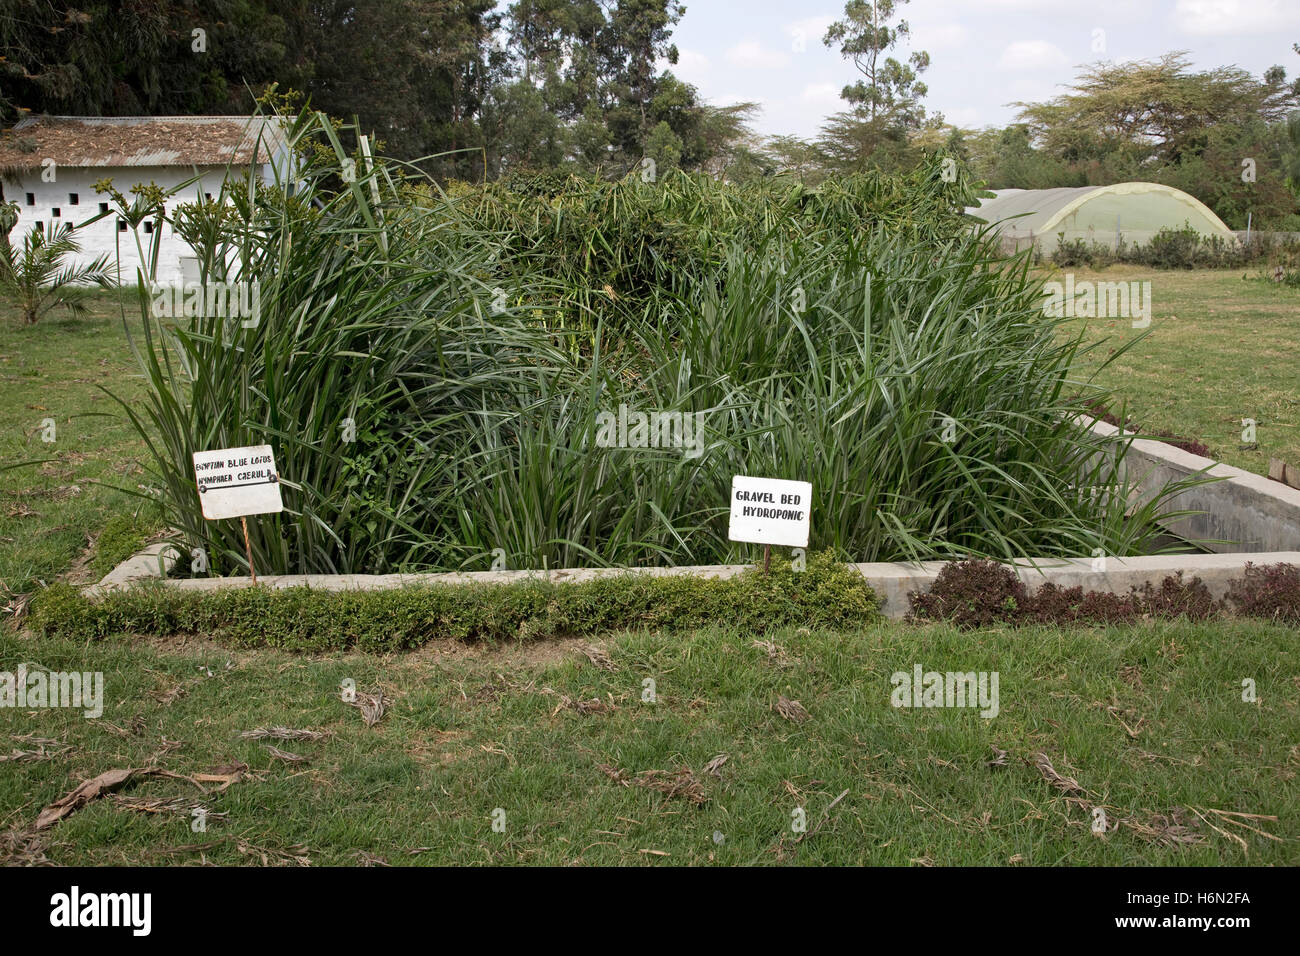 Wasserpflanzen im Kiesbett auf Bodenfilter Longonot Gartenbau Ltd Naivasha, Kenia Stockfoto